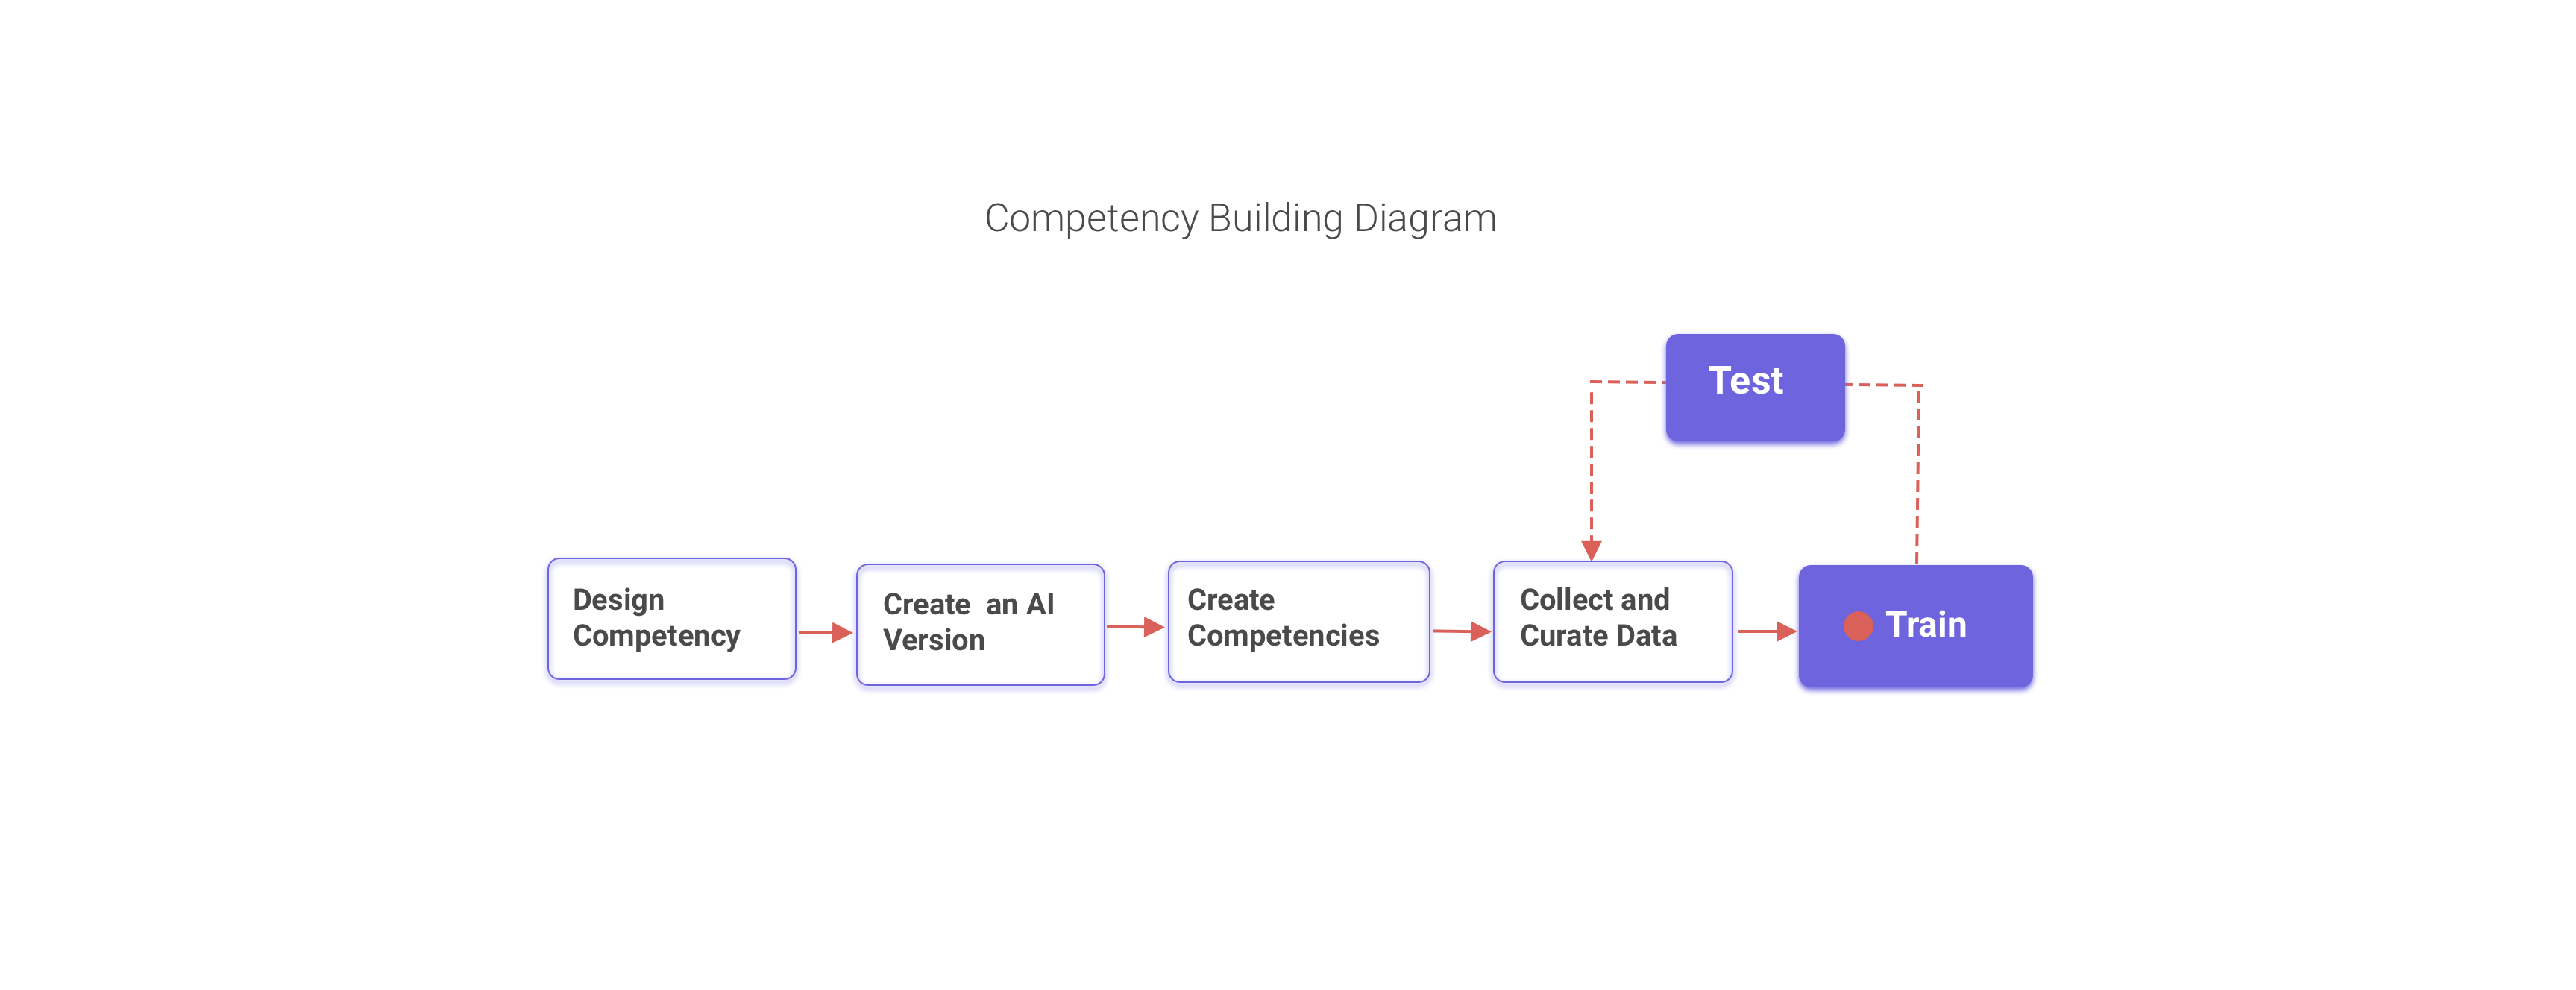 Competency Building Diagram